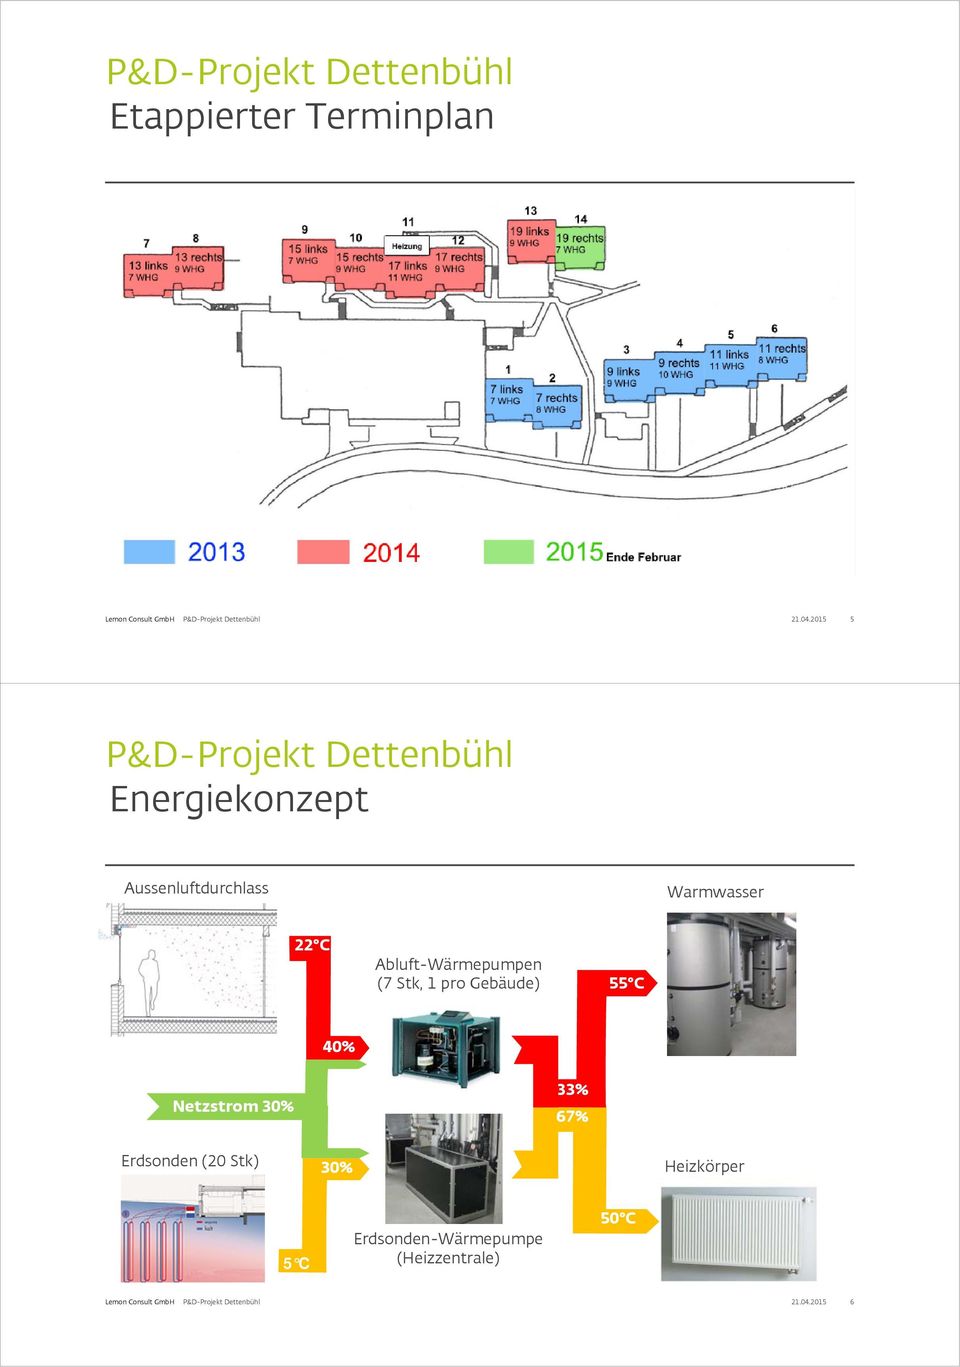 Abluft-Wärmepumpen (7 Stk, 1 pro Gebäude) 55 C 4% Netzstrom